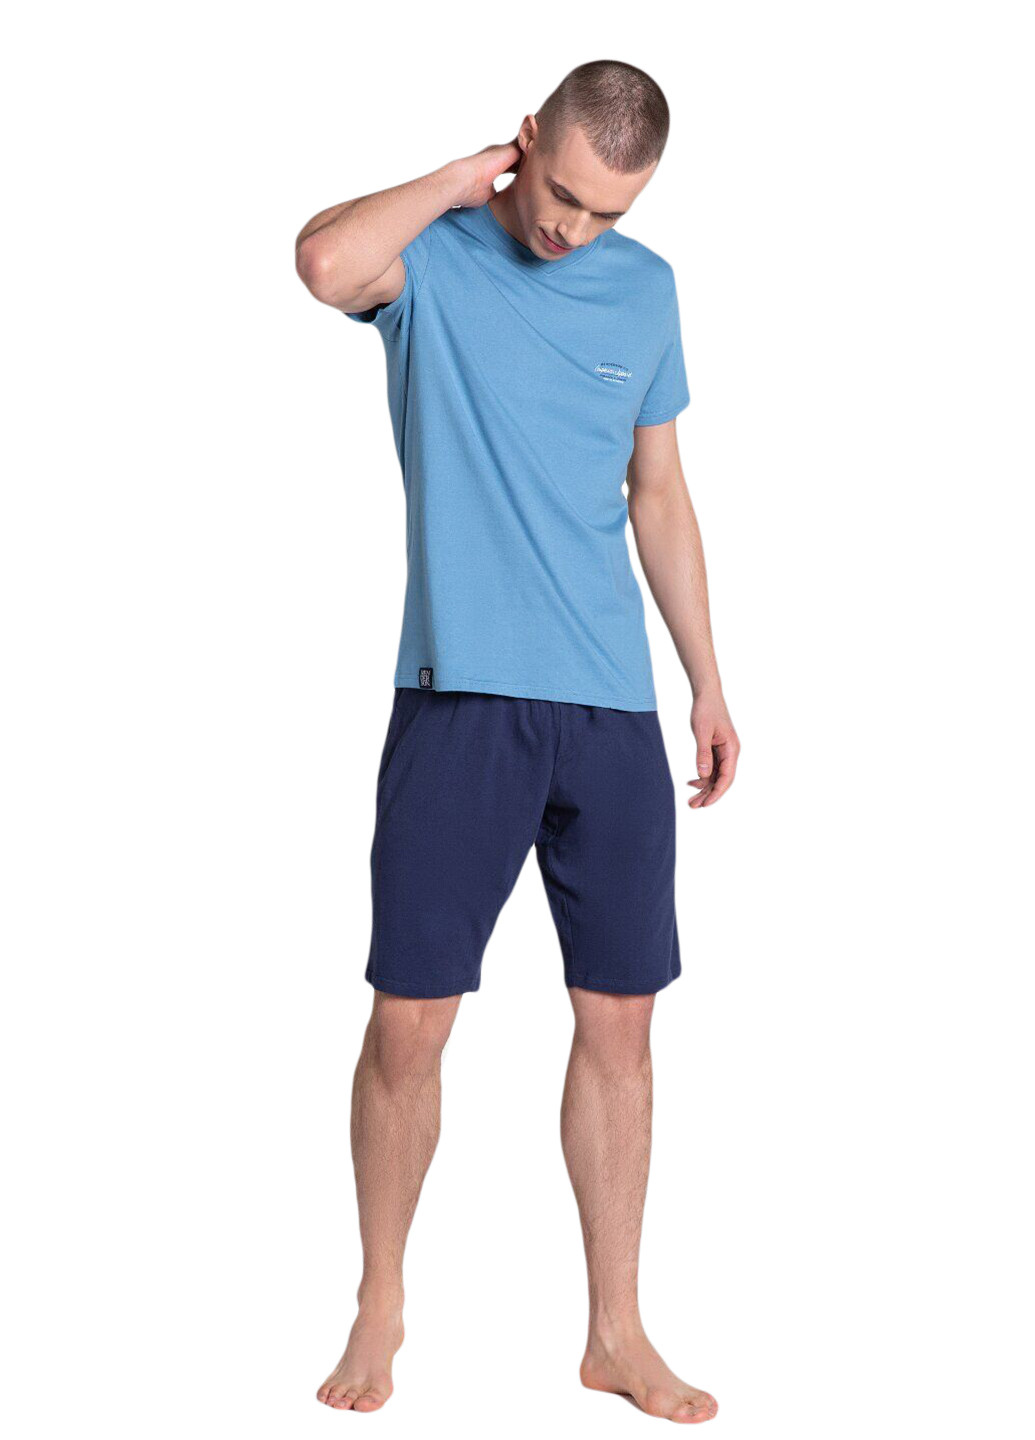 Пижама (футболка, шорты) Henderson футболка + шорты однотонная синяя домашняя хлопок, трикотаж